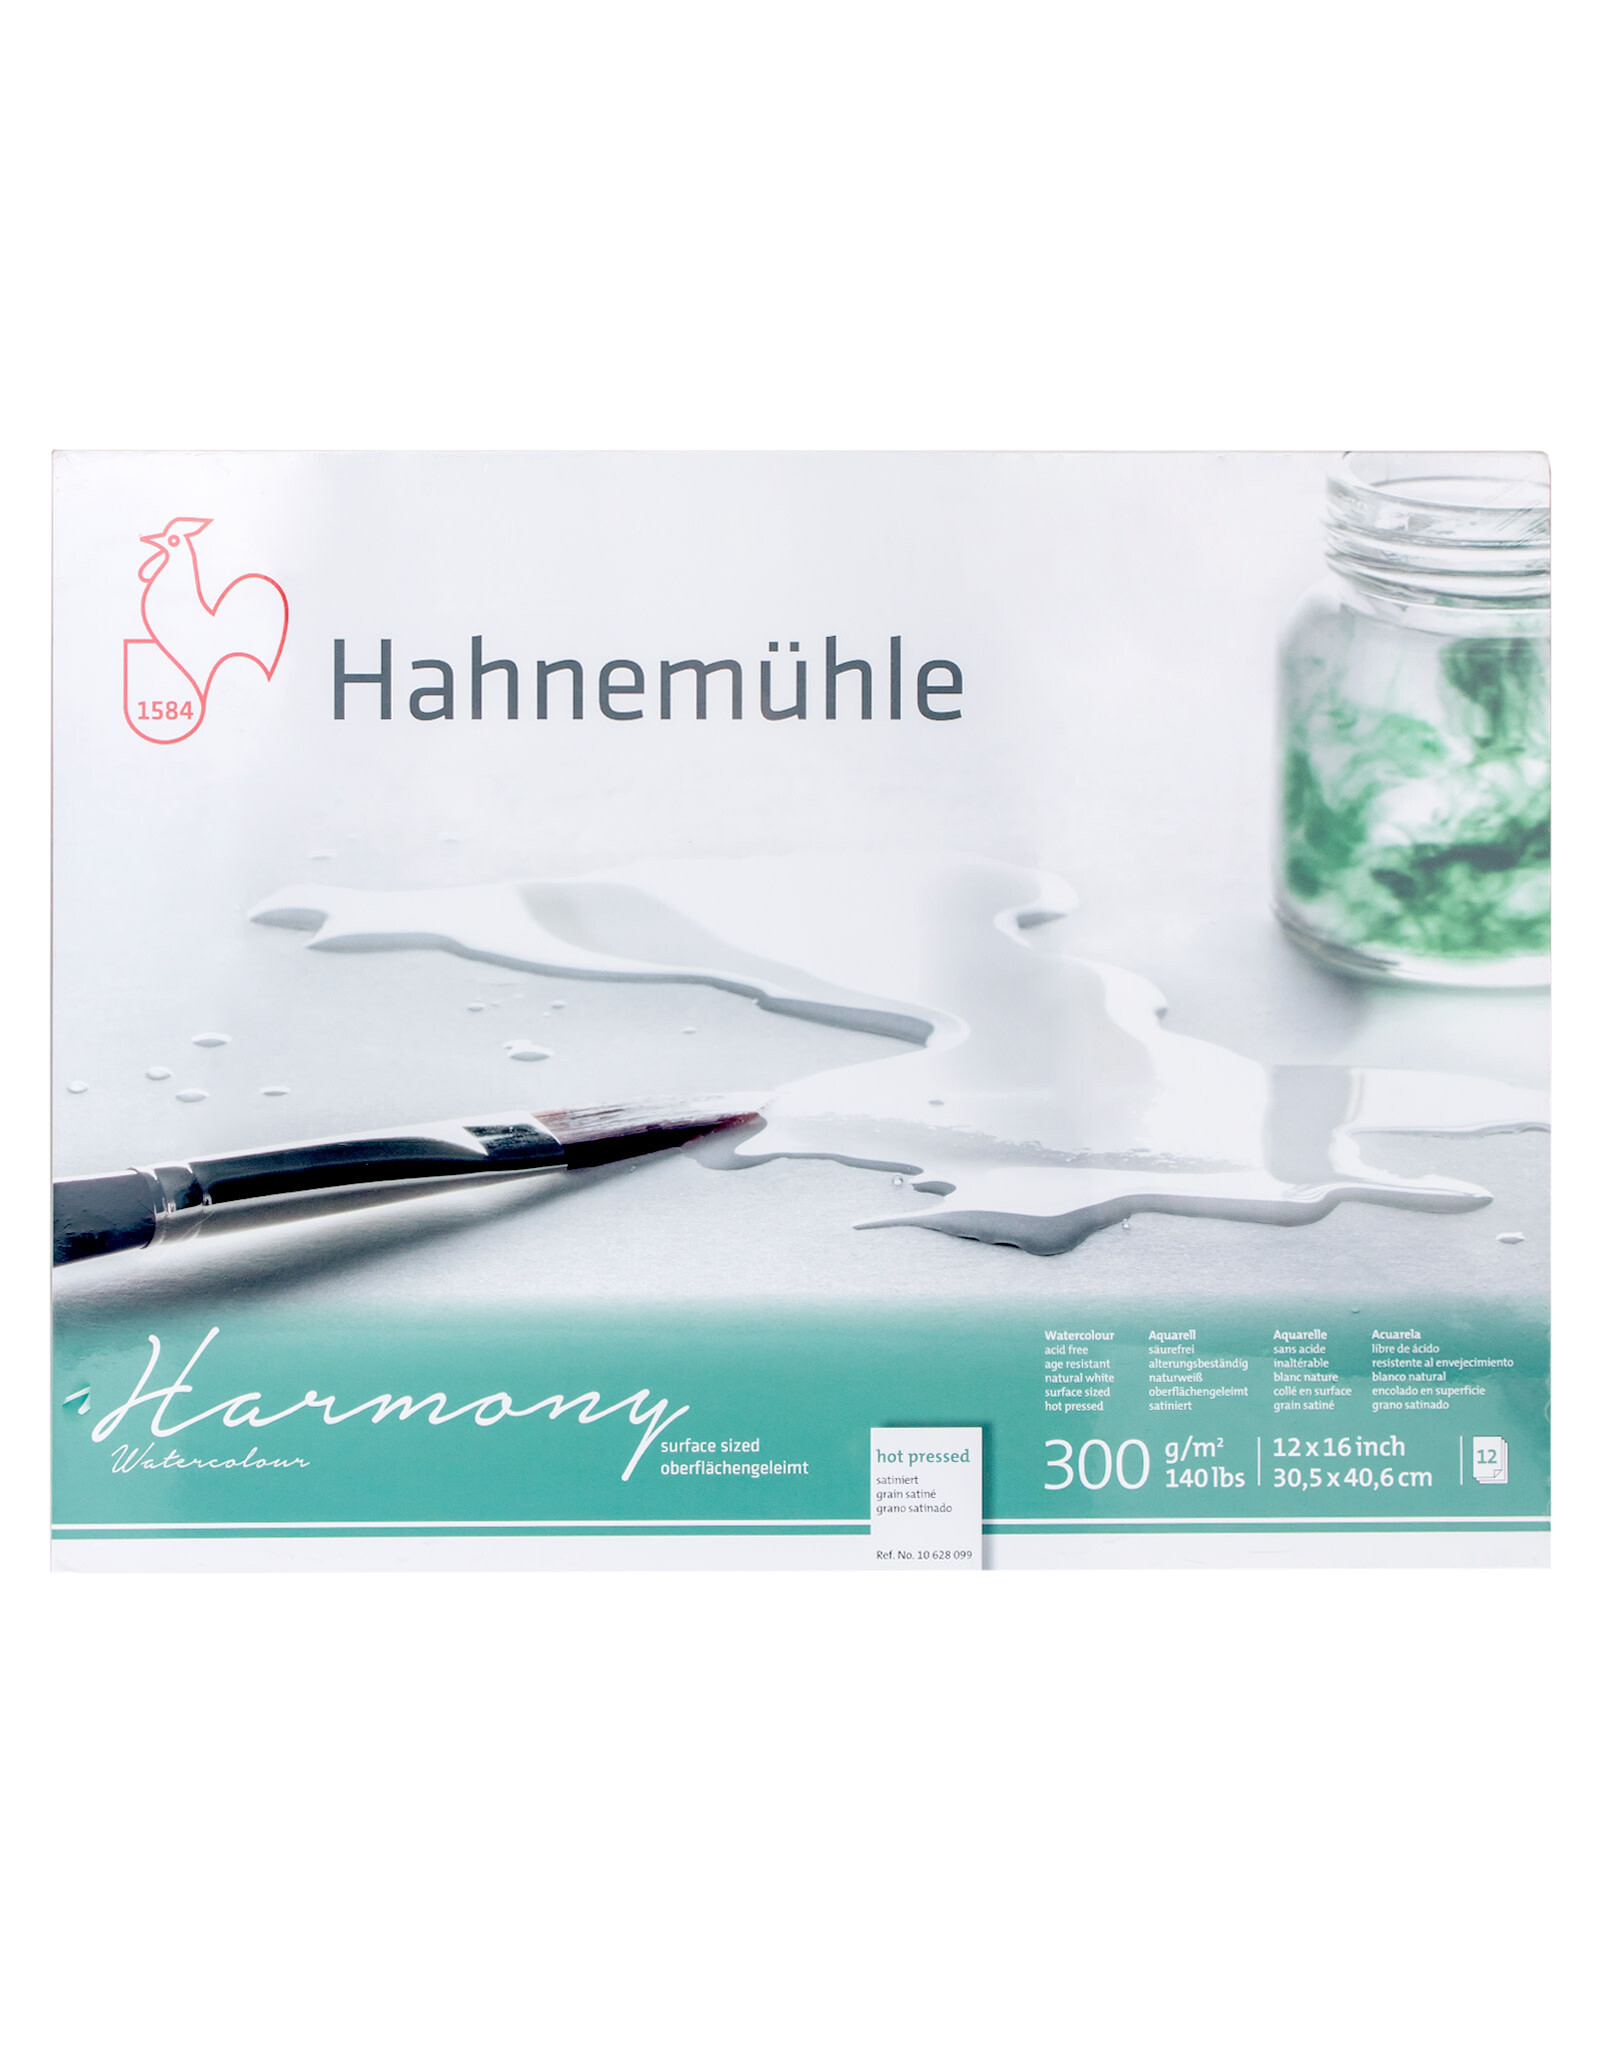 Hahnemuhle Hahnemuhle Harmony Watercolour Block, Hot Pressed, 12" x 16"